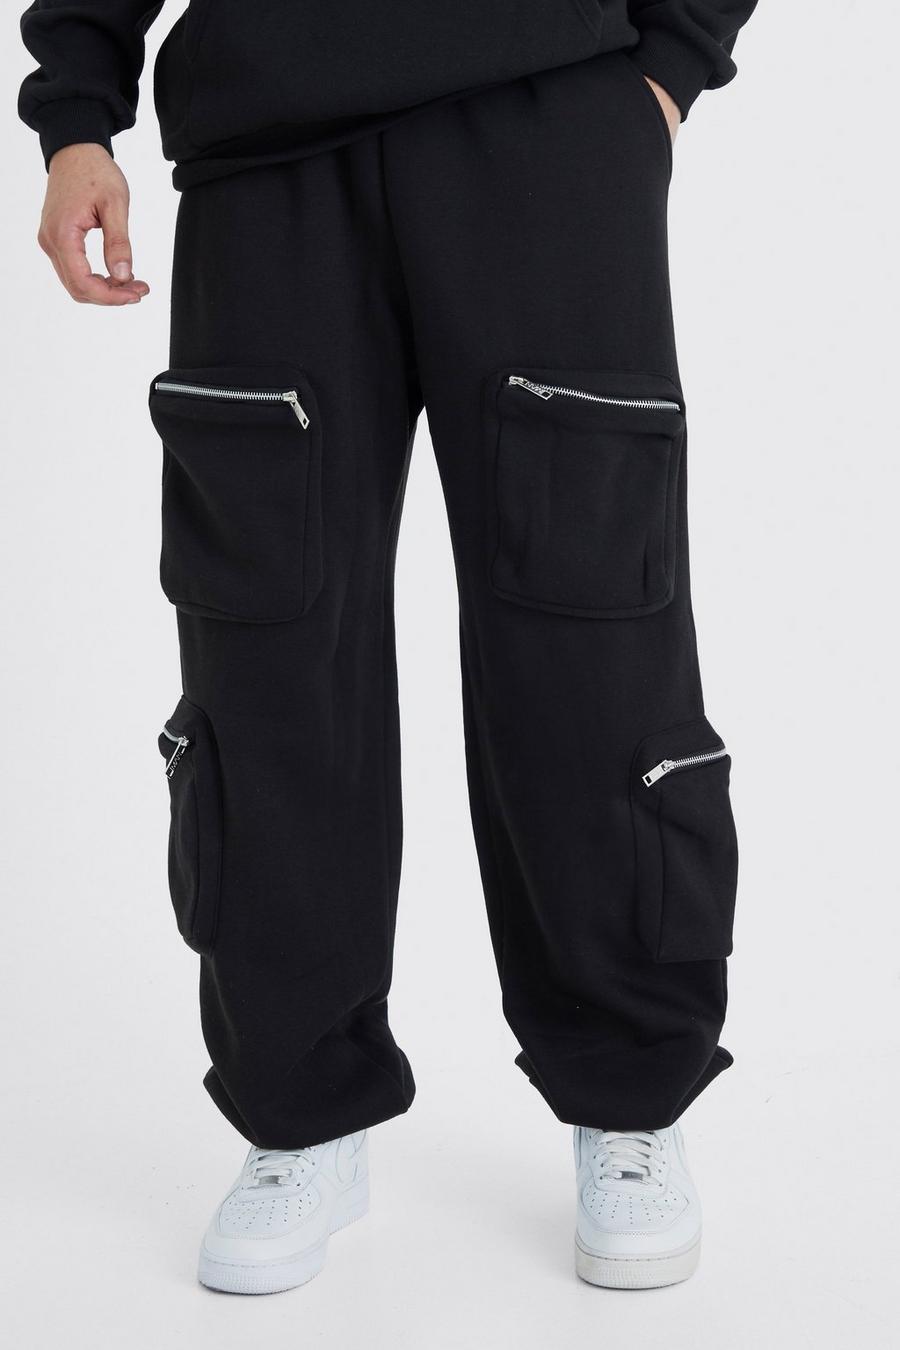 Pantaloni tuta Tall stile Utility stile Cargo, Black image number 1